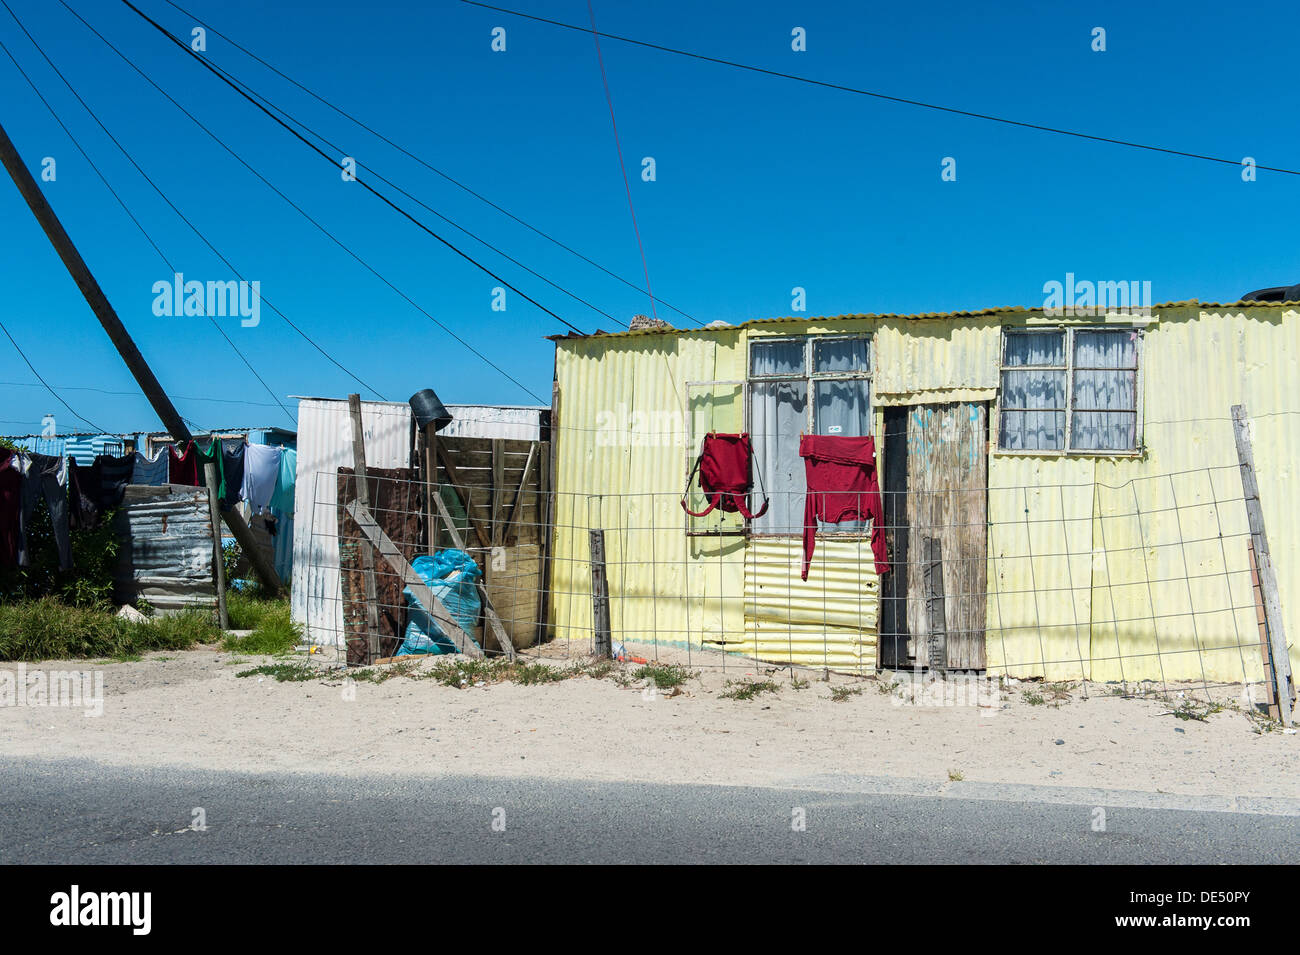 Wellblechhütten in Khayelitsha, einem teilweise informellen Township in Kapstadt, Südafrika Stockfoto